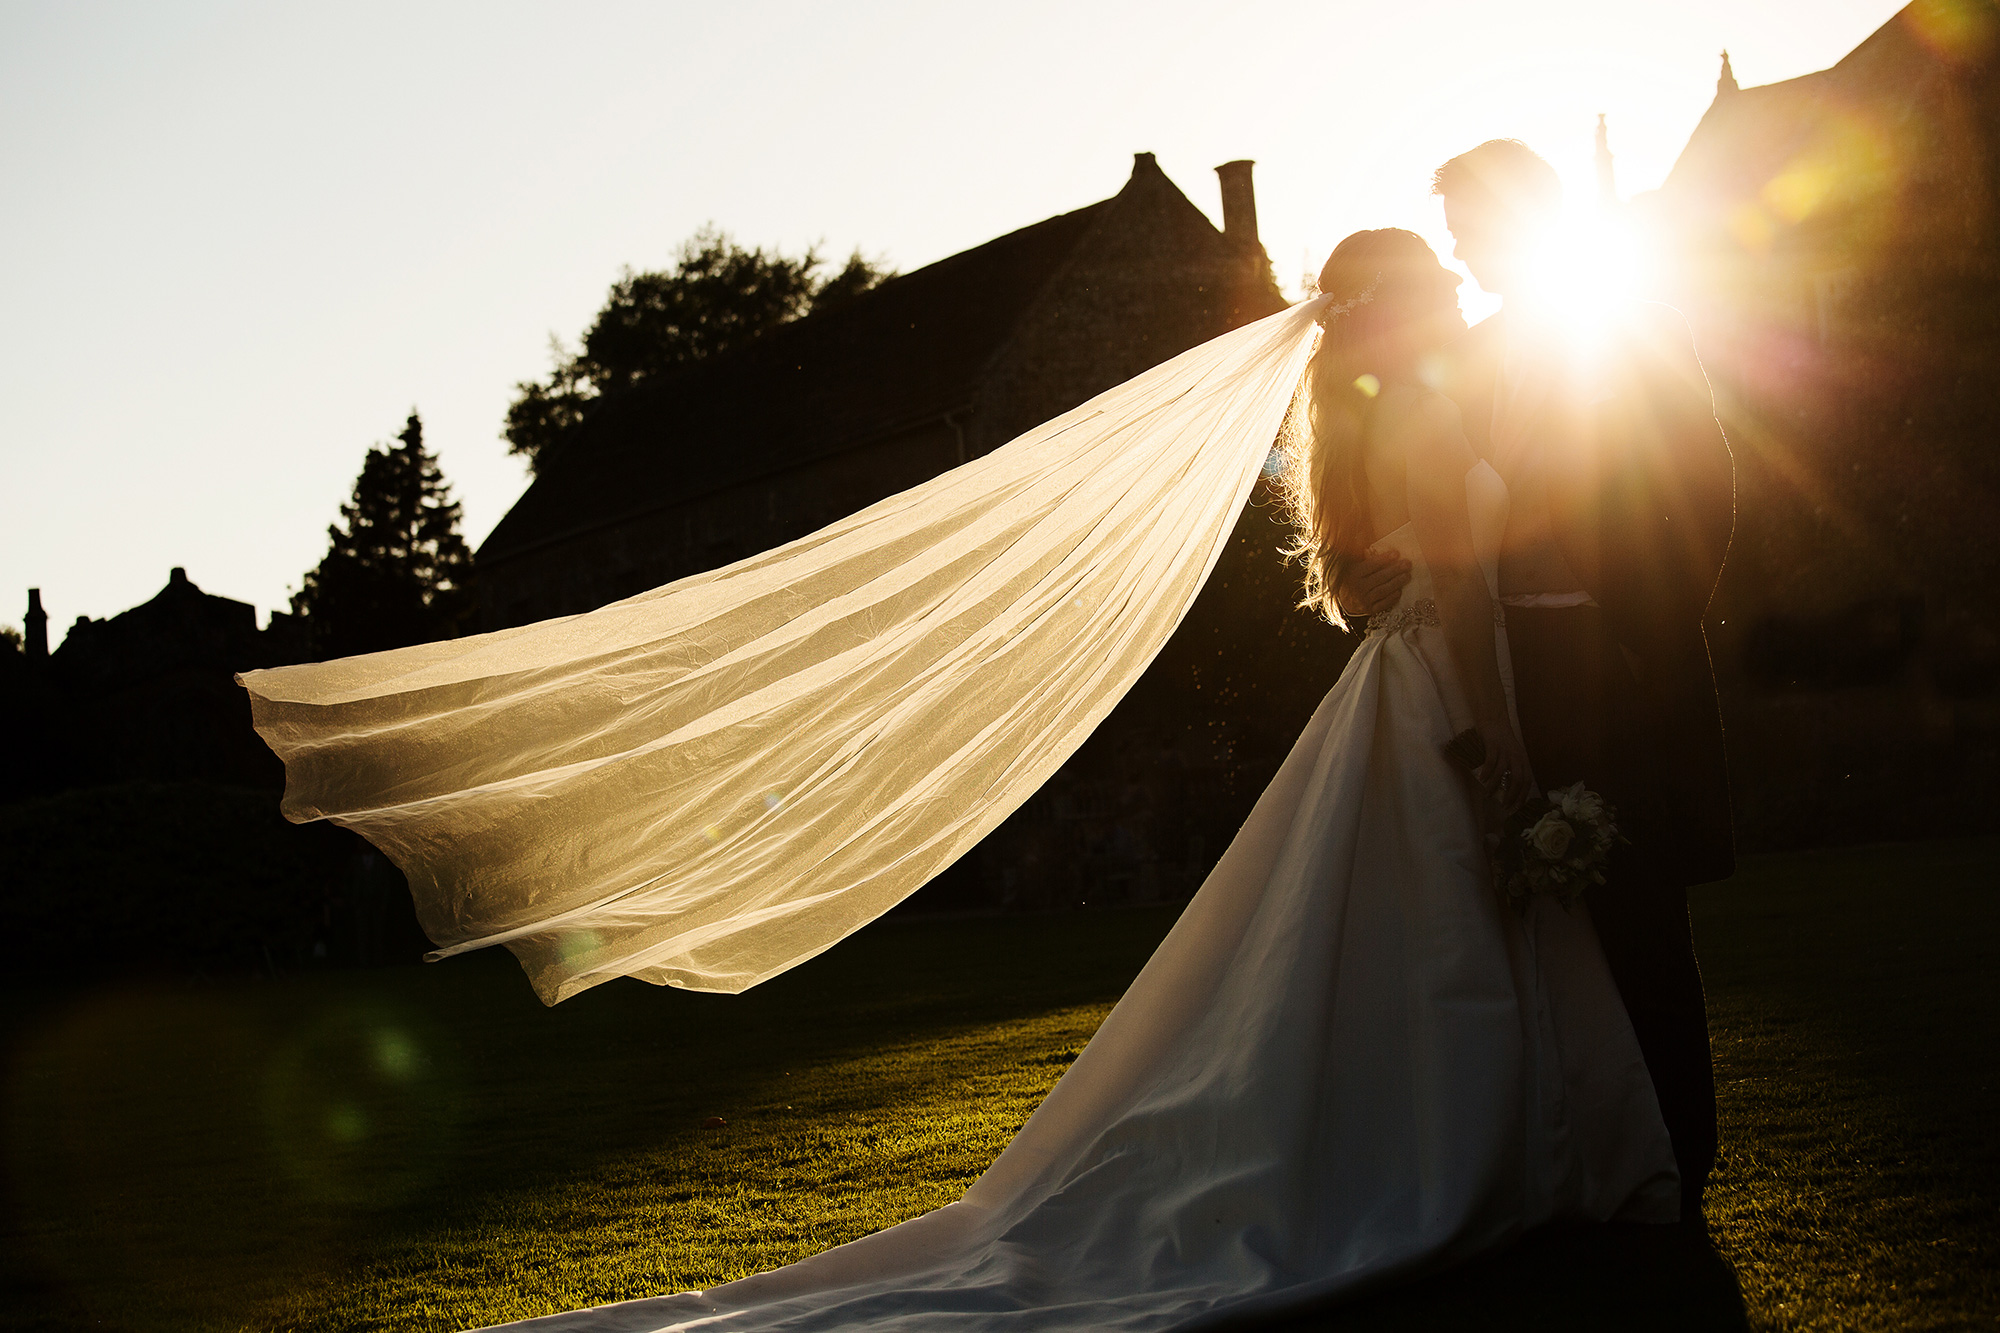 Fern_James_Traditional-Wedding_Martin-Dabek-Photography_034